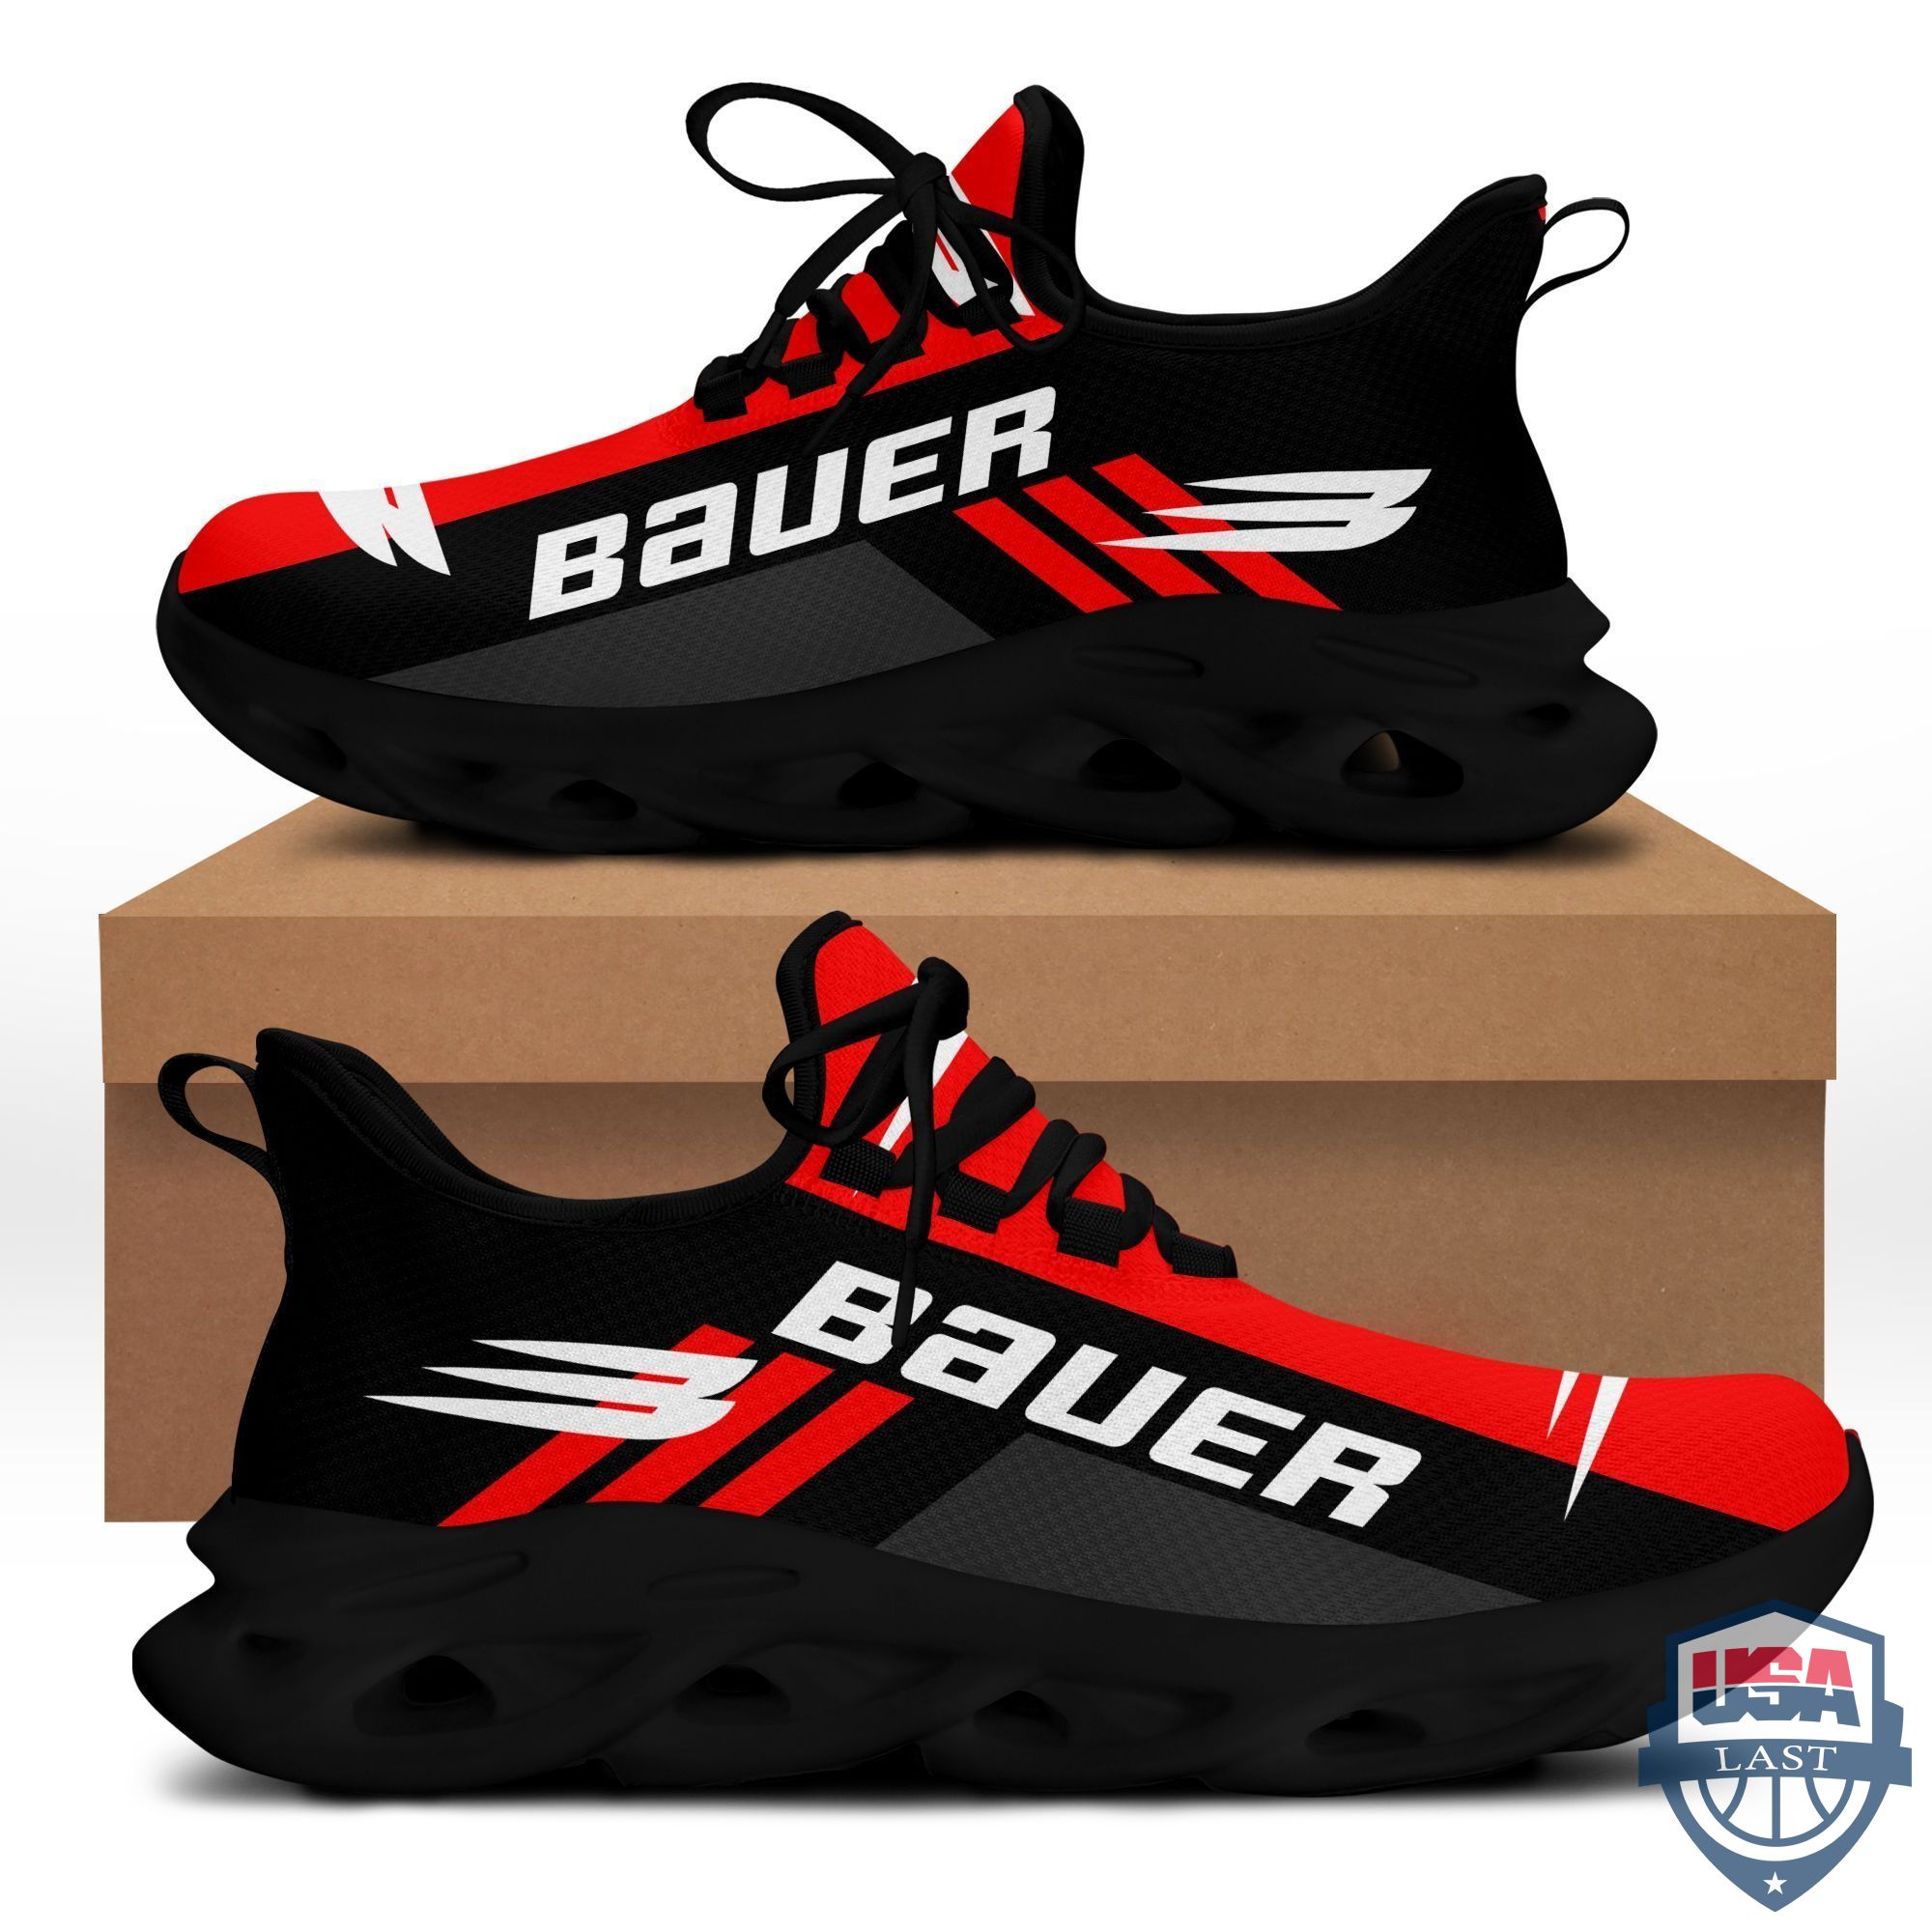 Bauer Max Soul Shoes Red Version For Men, Women